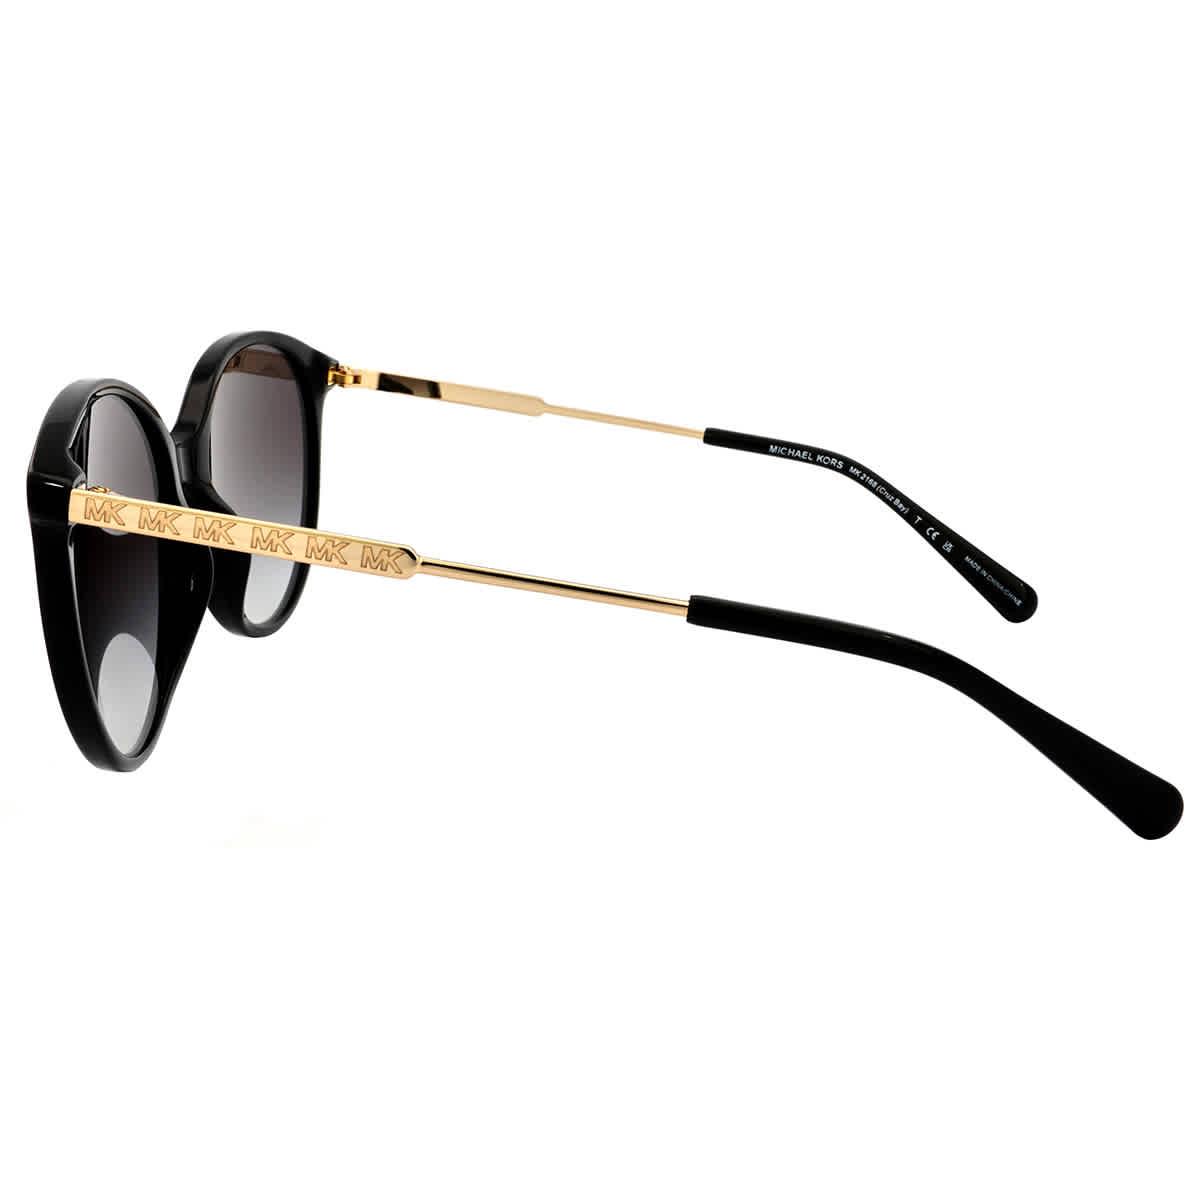 Michael Kors Cruz Bay Sunglasses in Black | Lyst